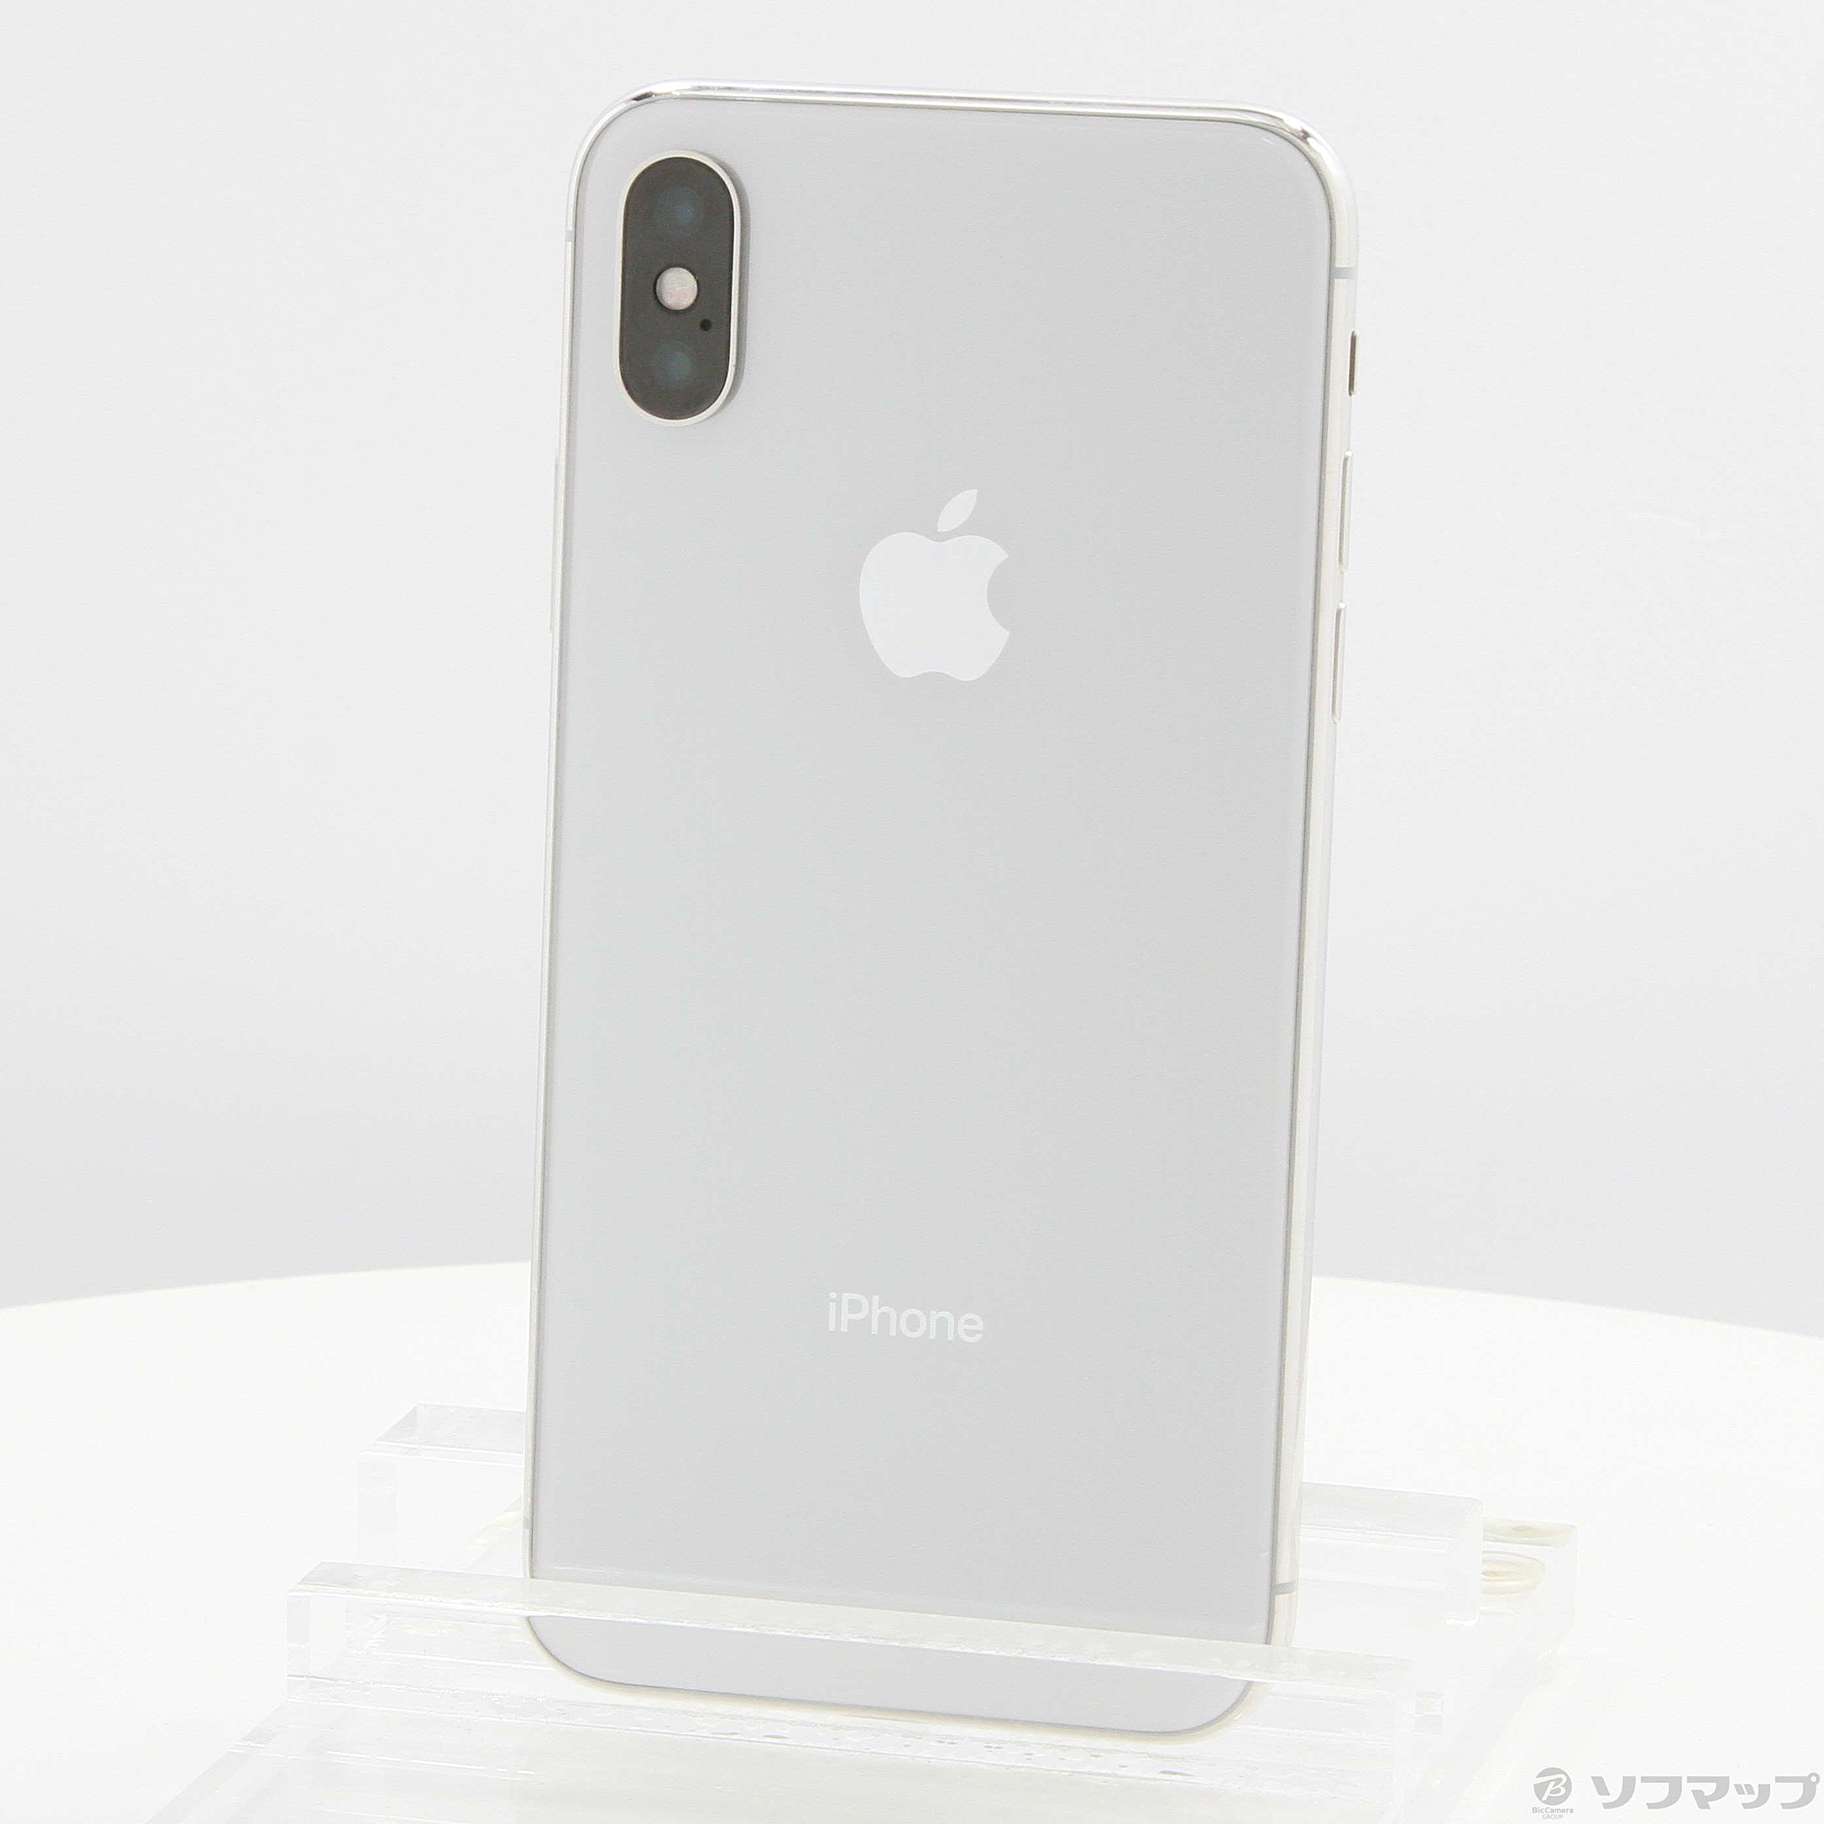 iPhone X Silver 64 GB Softbank-